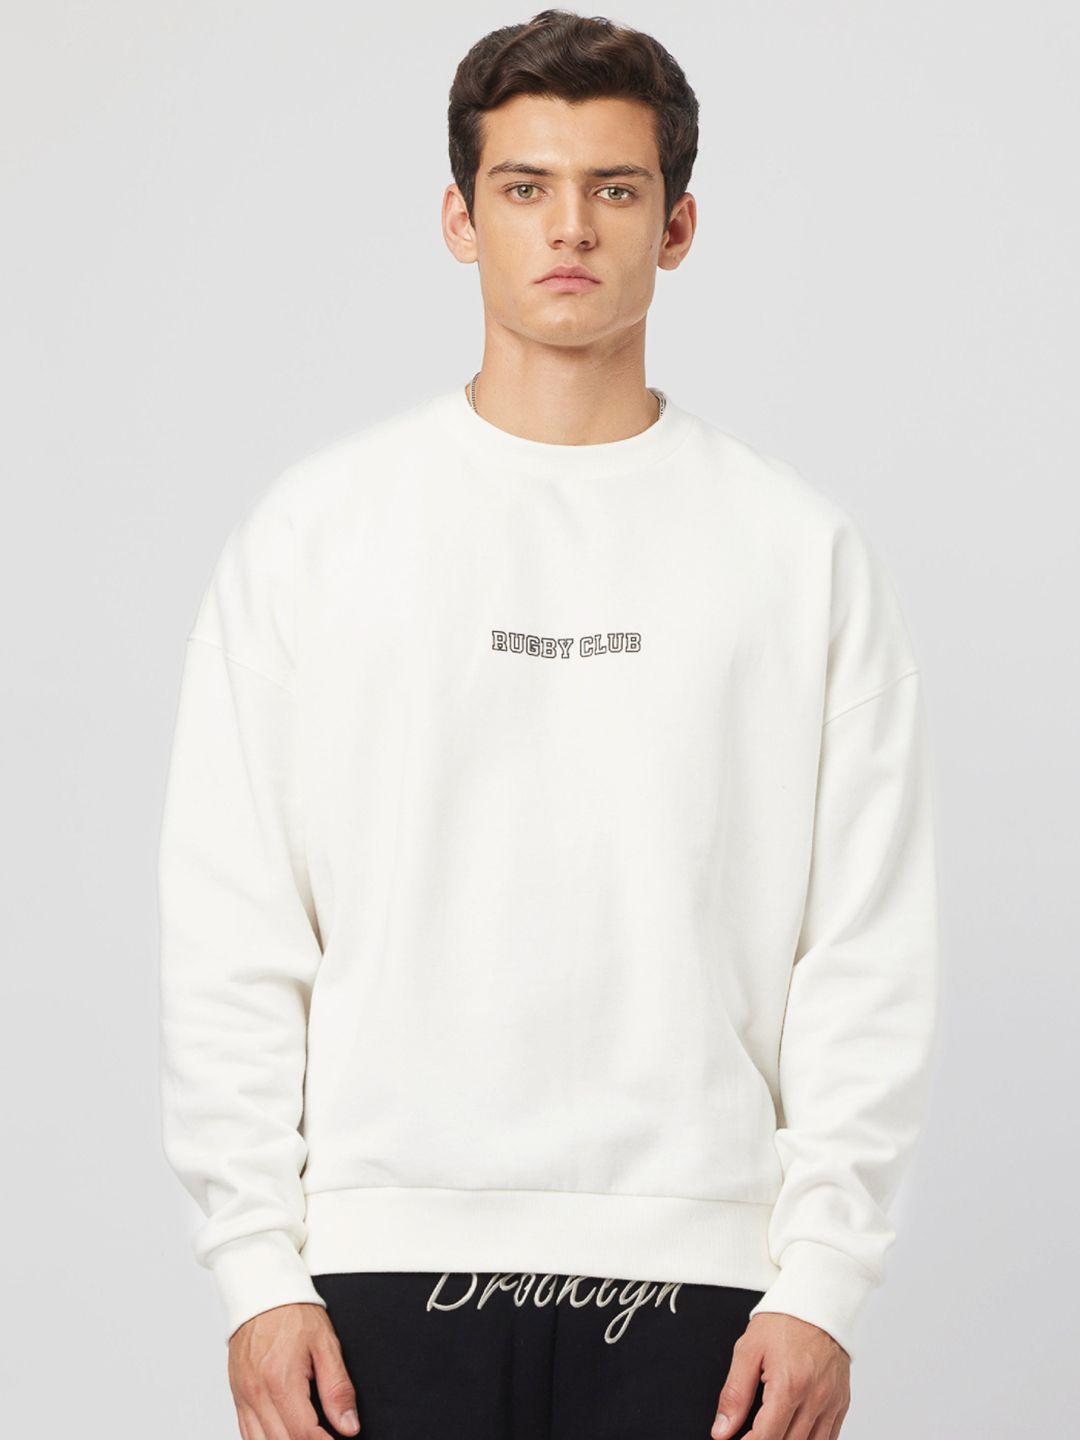 koovs typography printed cotton pullover straight sweatshirt